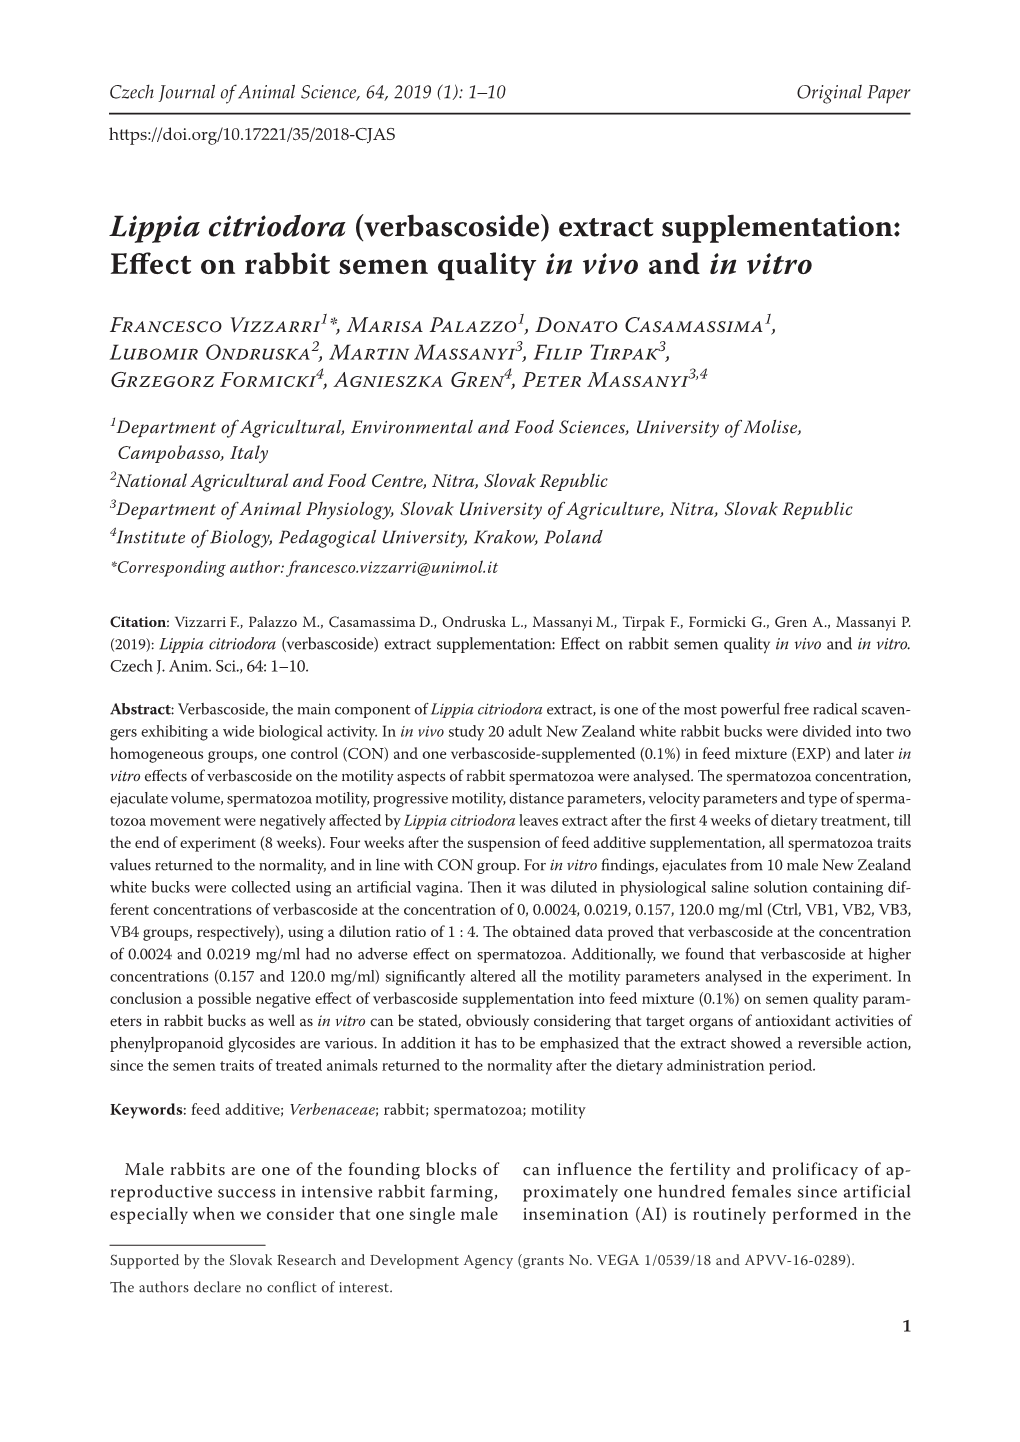 Lippia Citriodora (Verbascoside) Extract Supplementation: Effect on Rabbit Semen Quality in Vivo and in Vitro